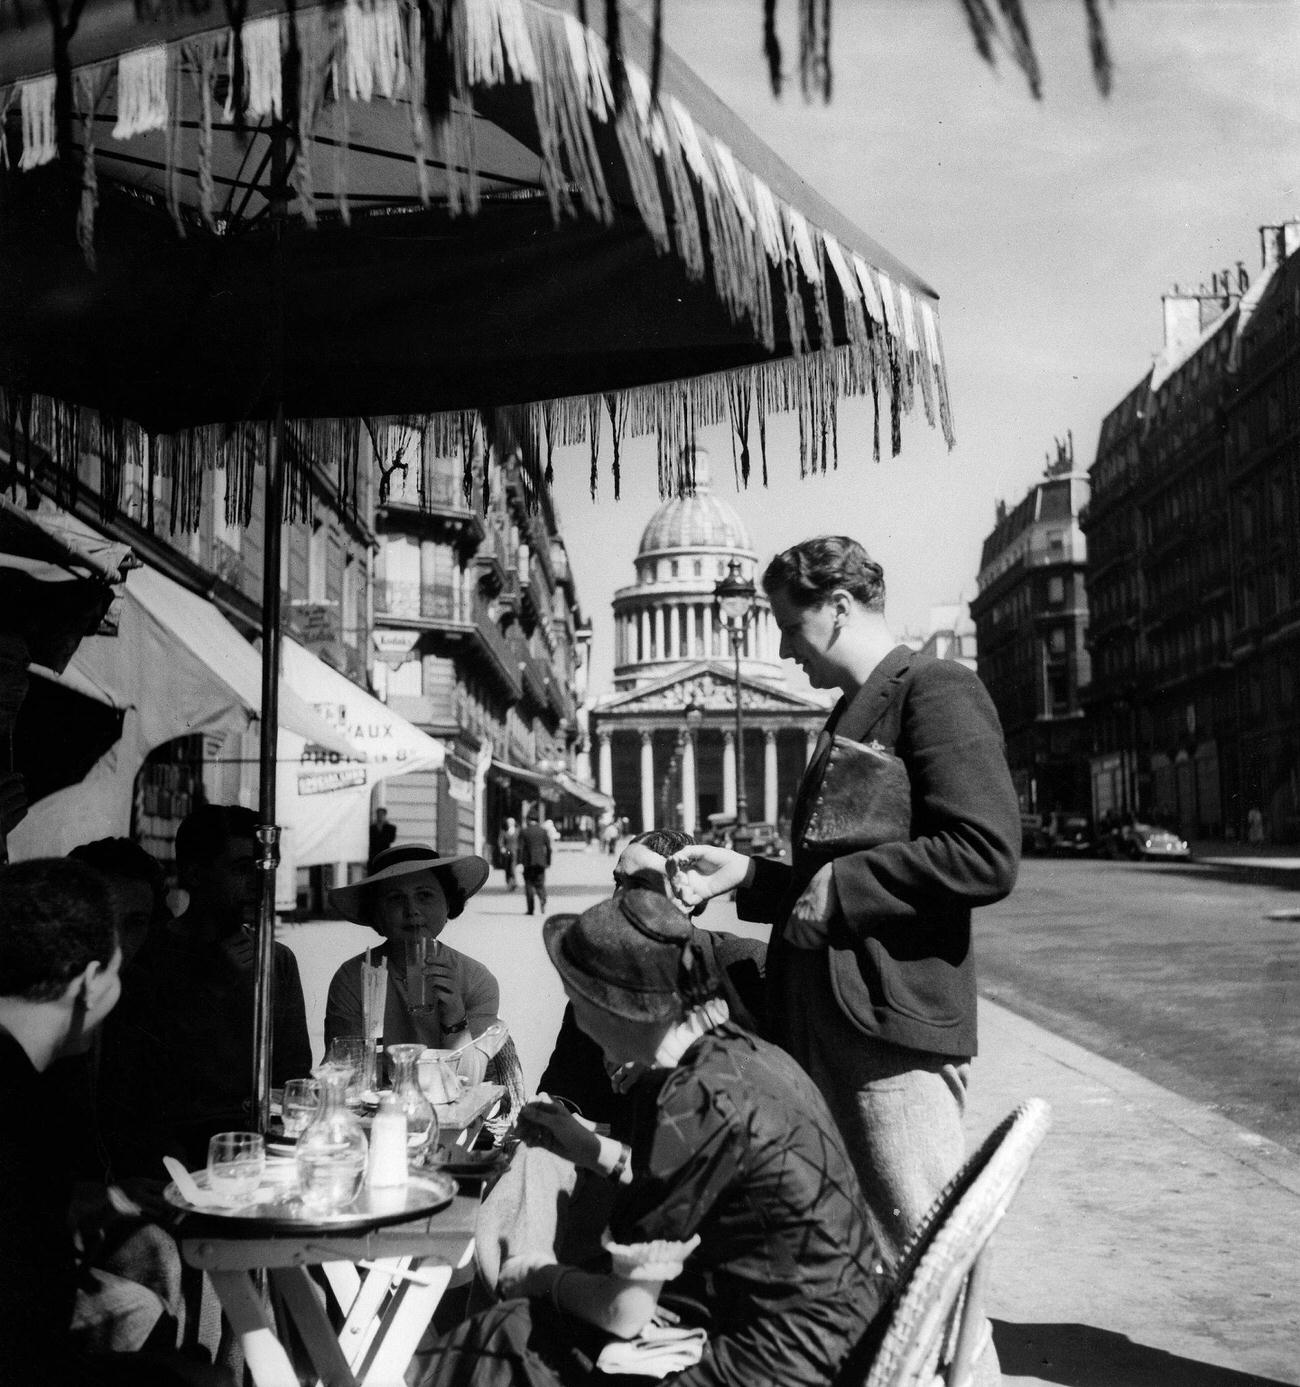 Students at Cafe Capulade, Paris, 18 March 1938 (Photographer: Malina)